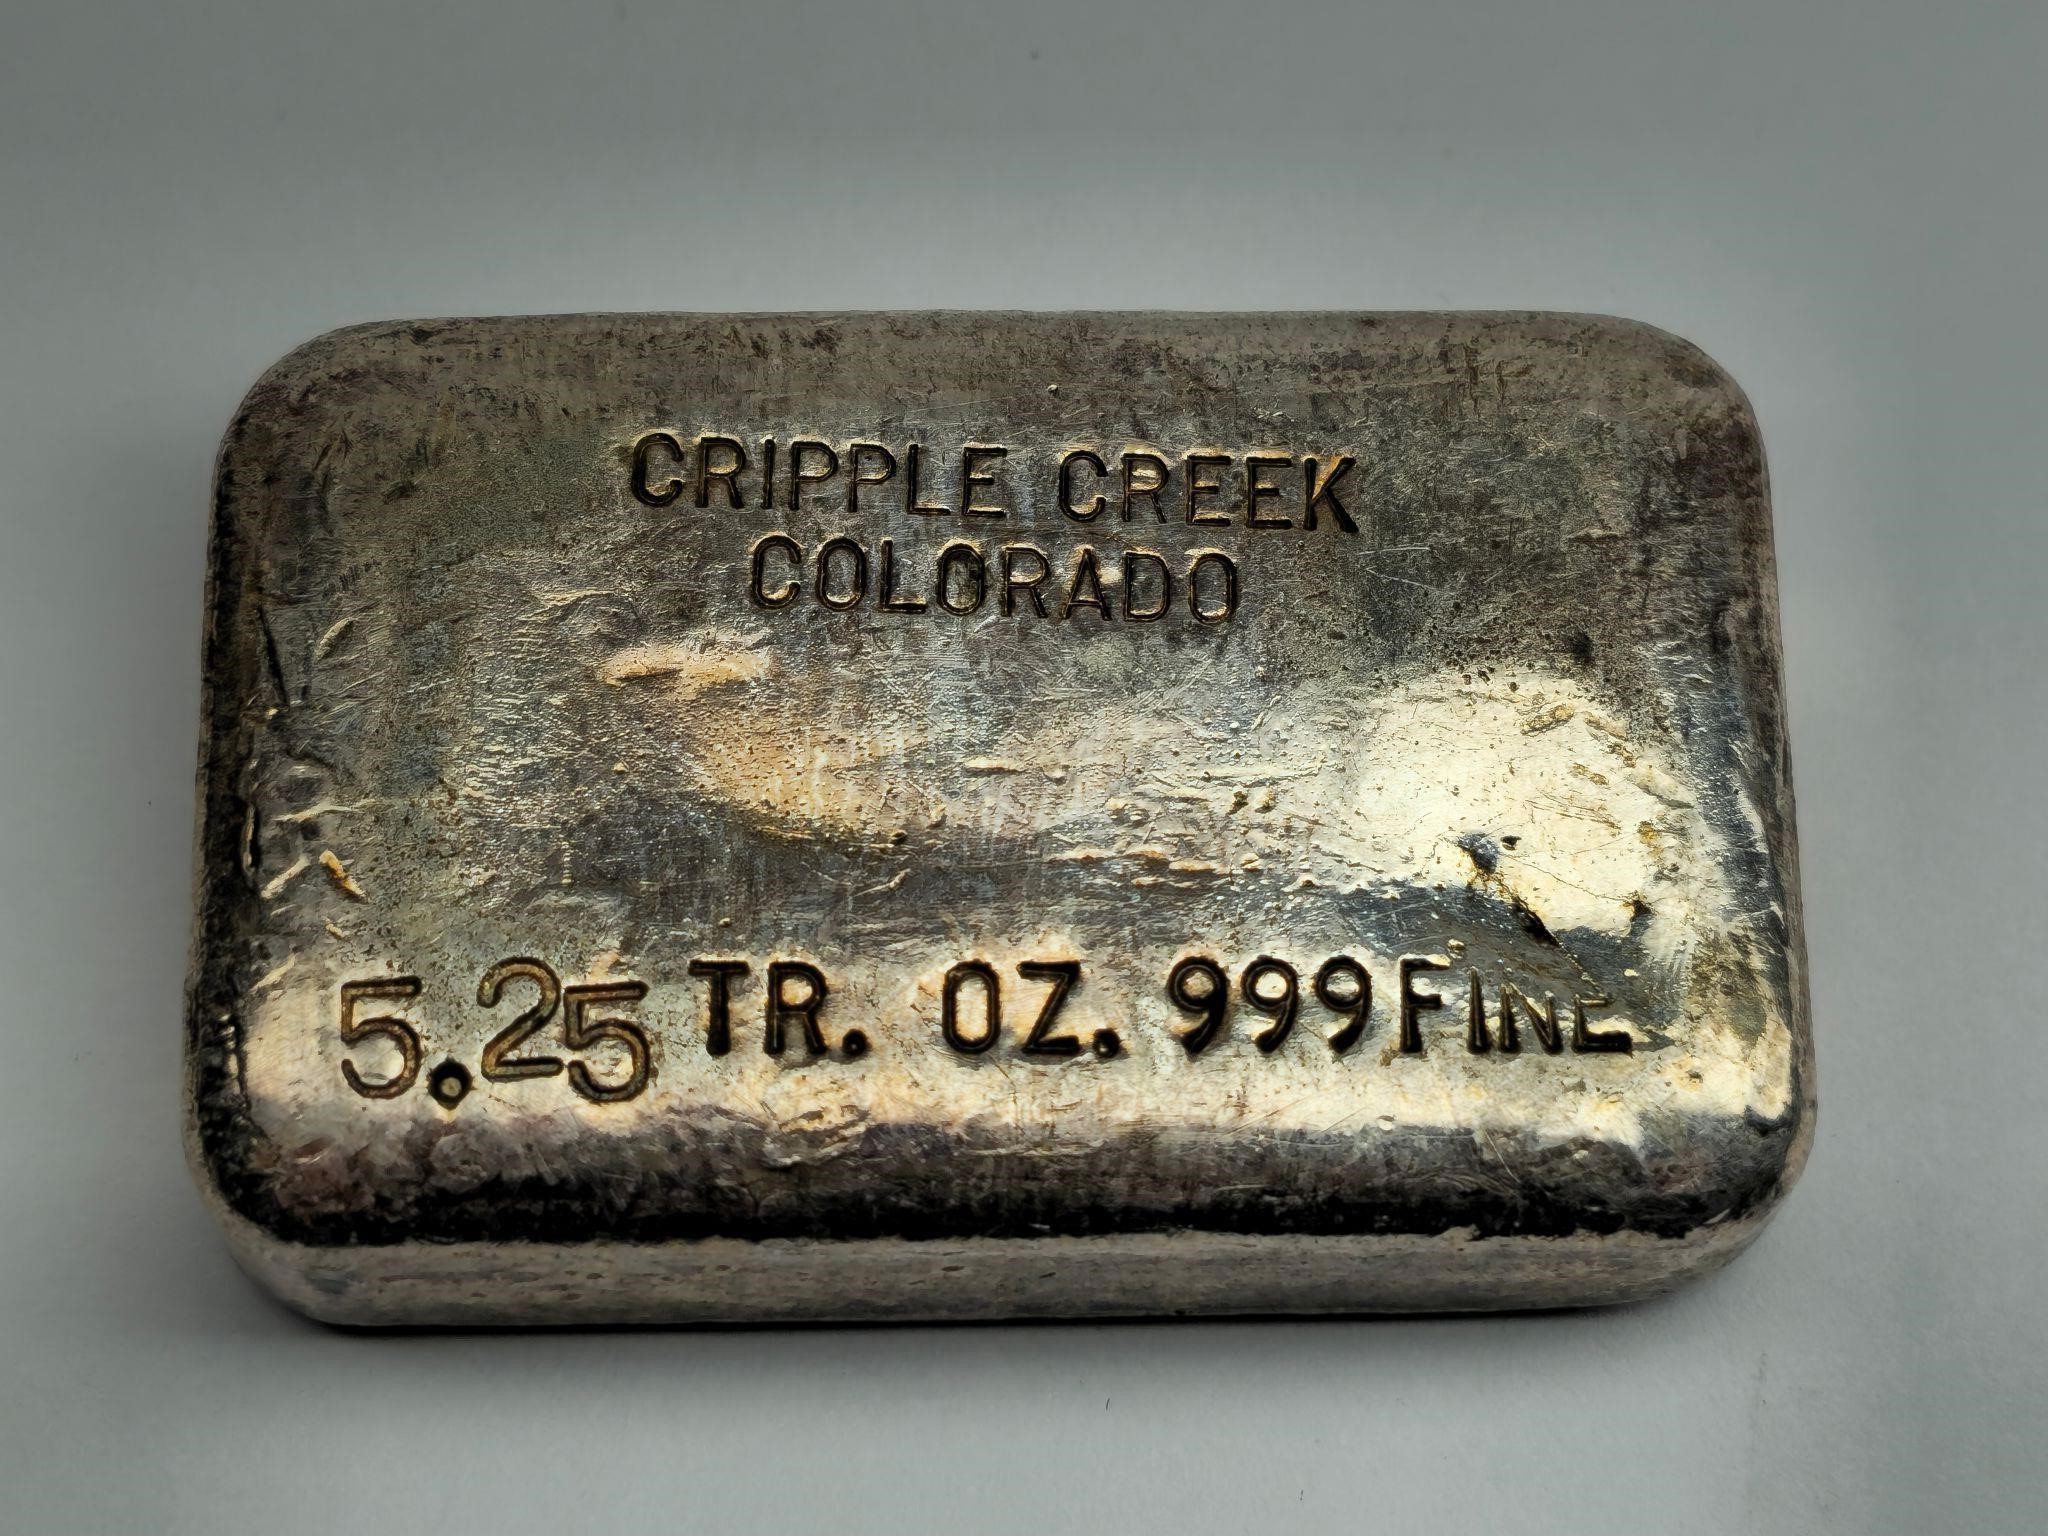 5 ozt .999 Fine Cripple Creek Colorado Silver Bar